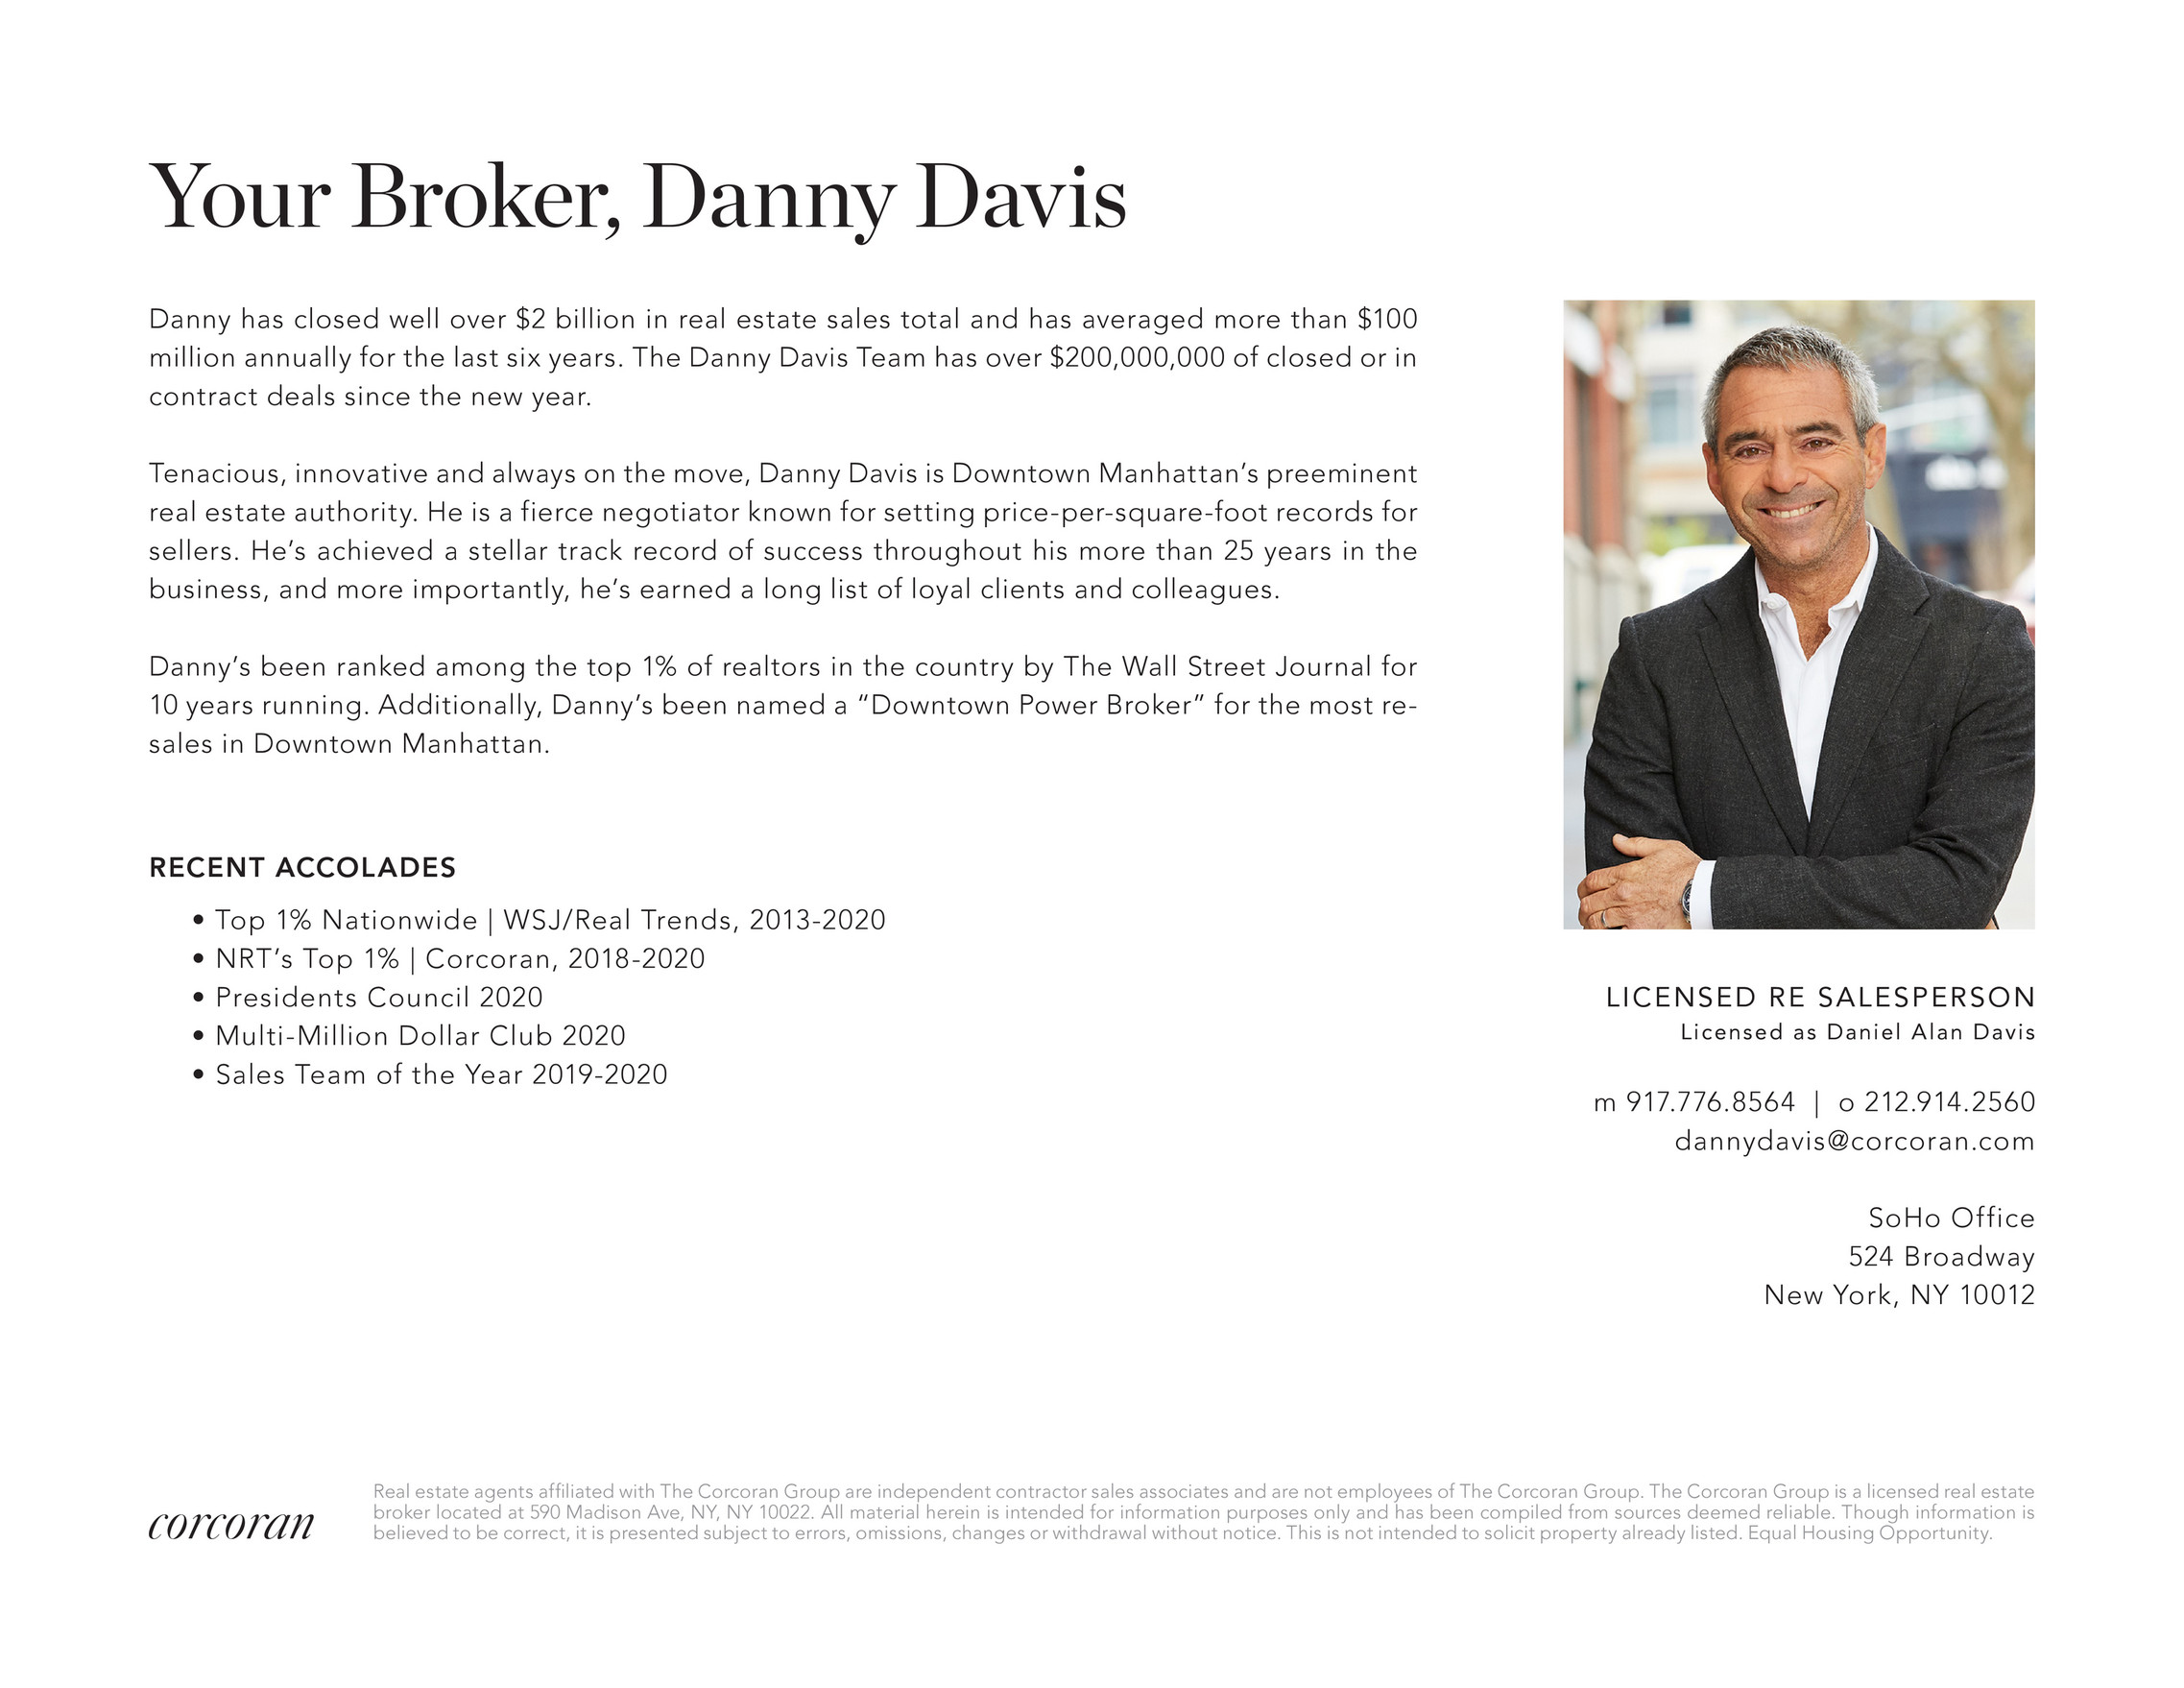 Danny Davis NYC Real Estate